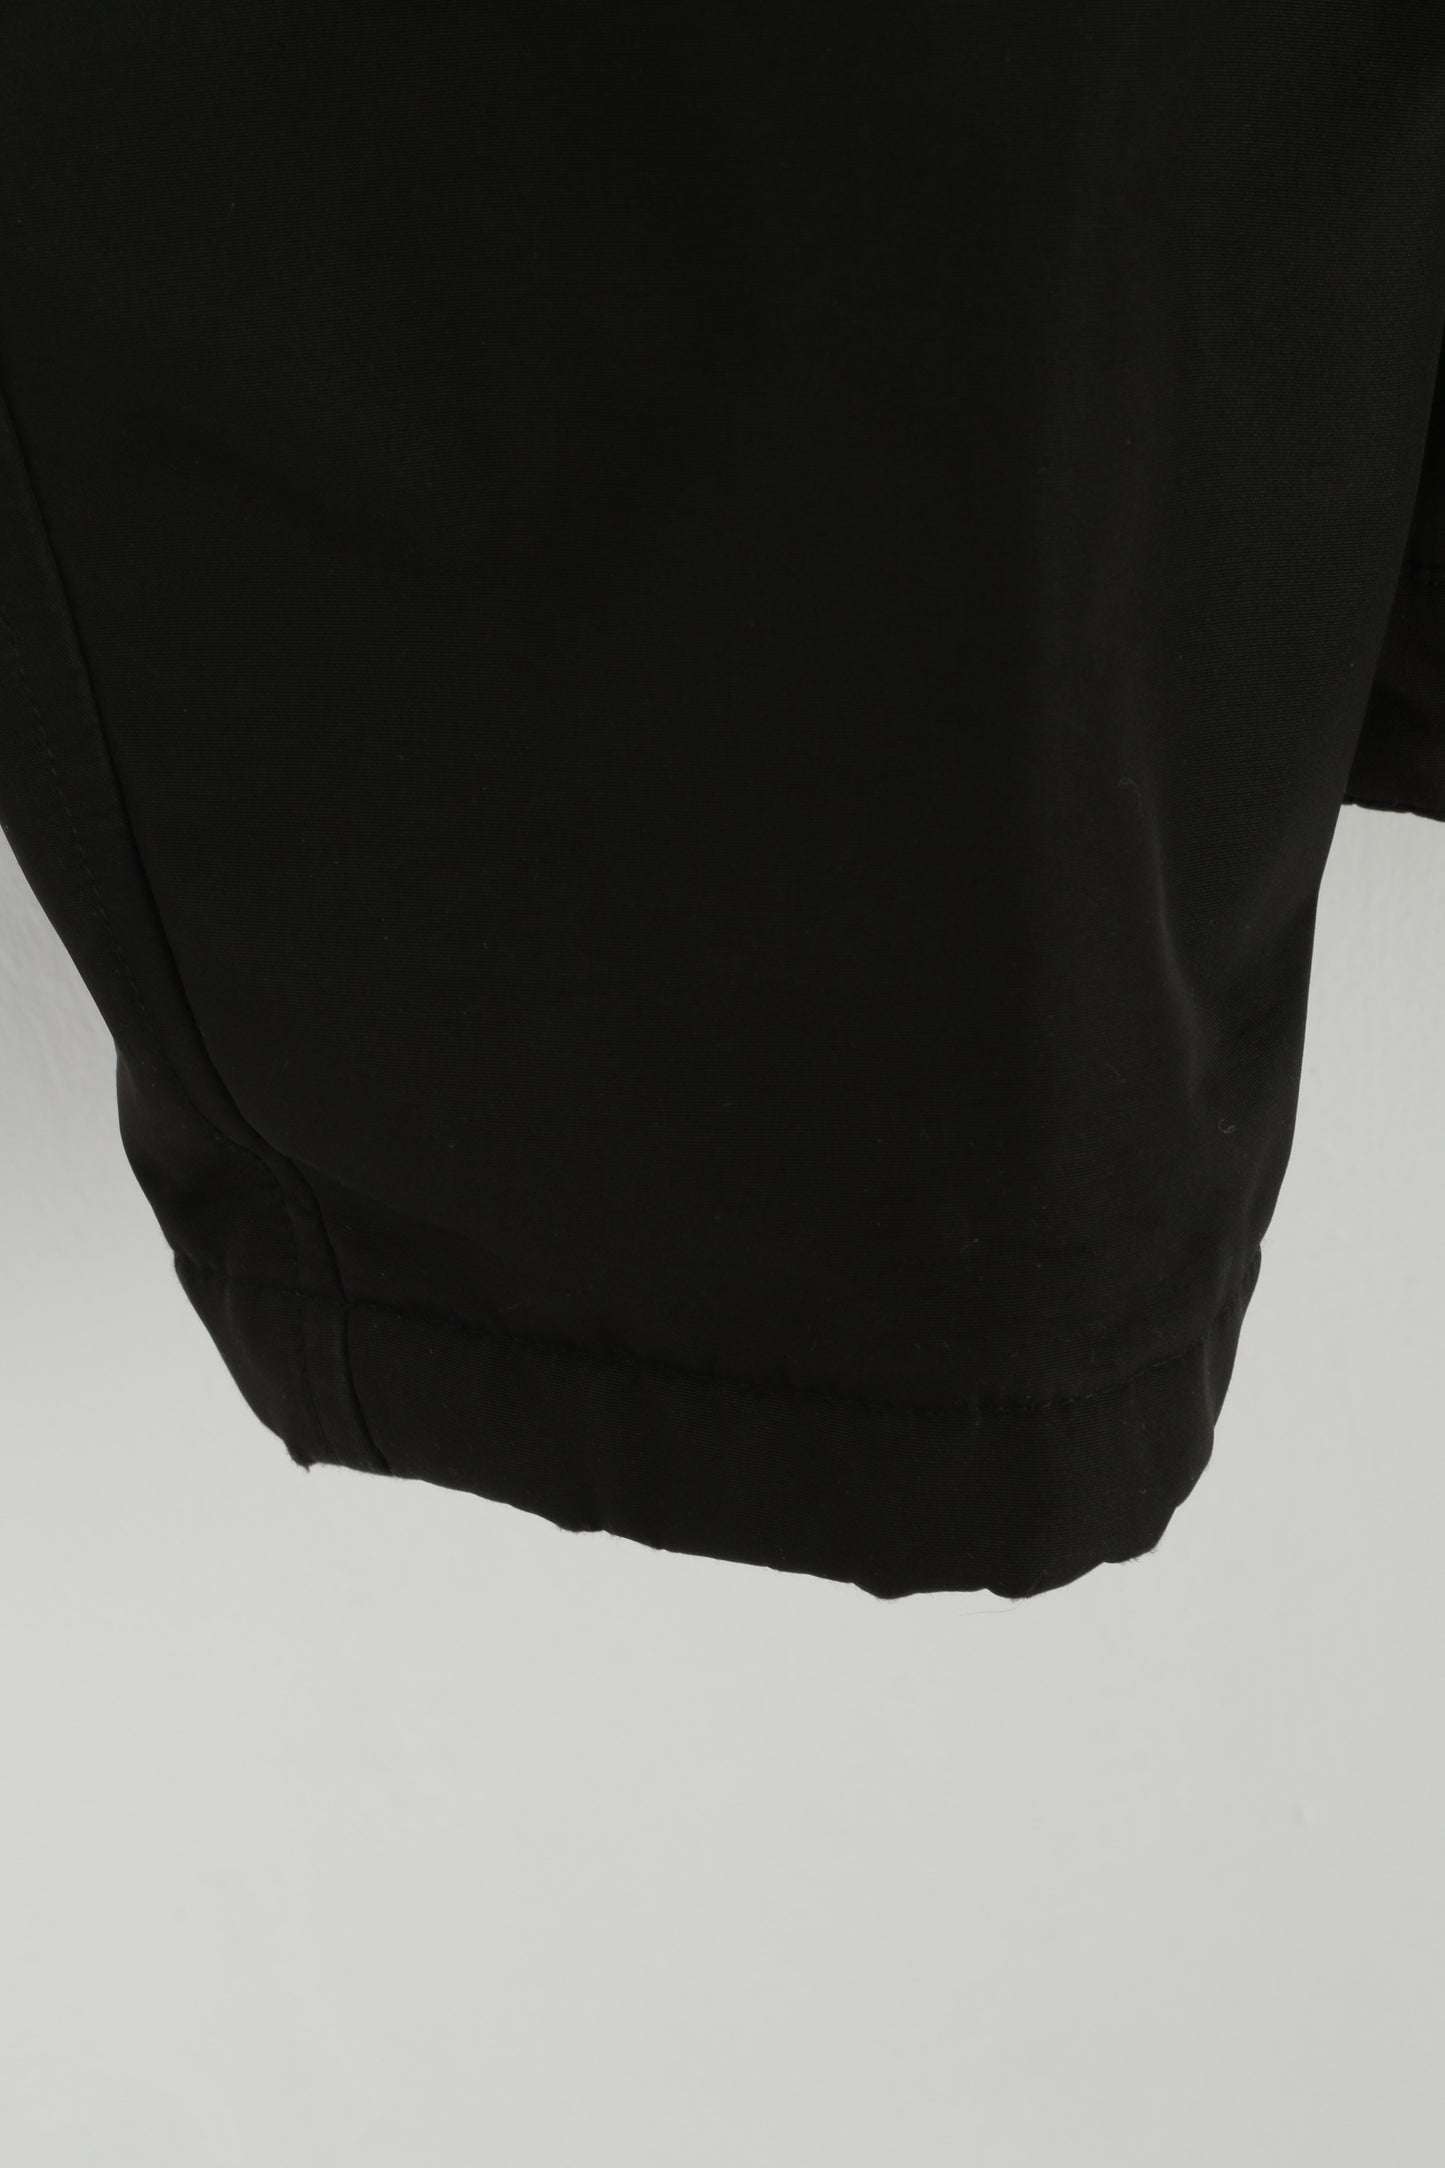 Marin Alpin Mens XL Jacket Black Full Zipper Softshell Sport Leisurewear Top